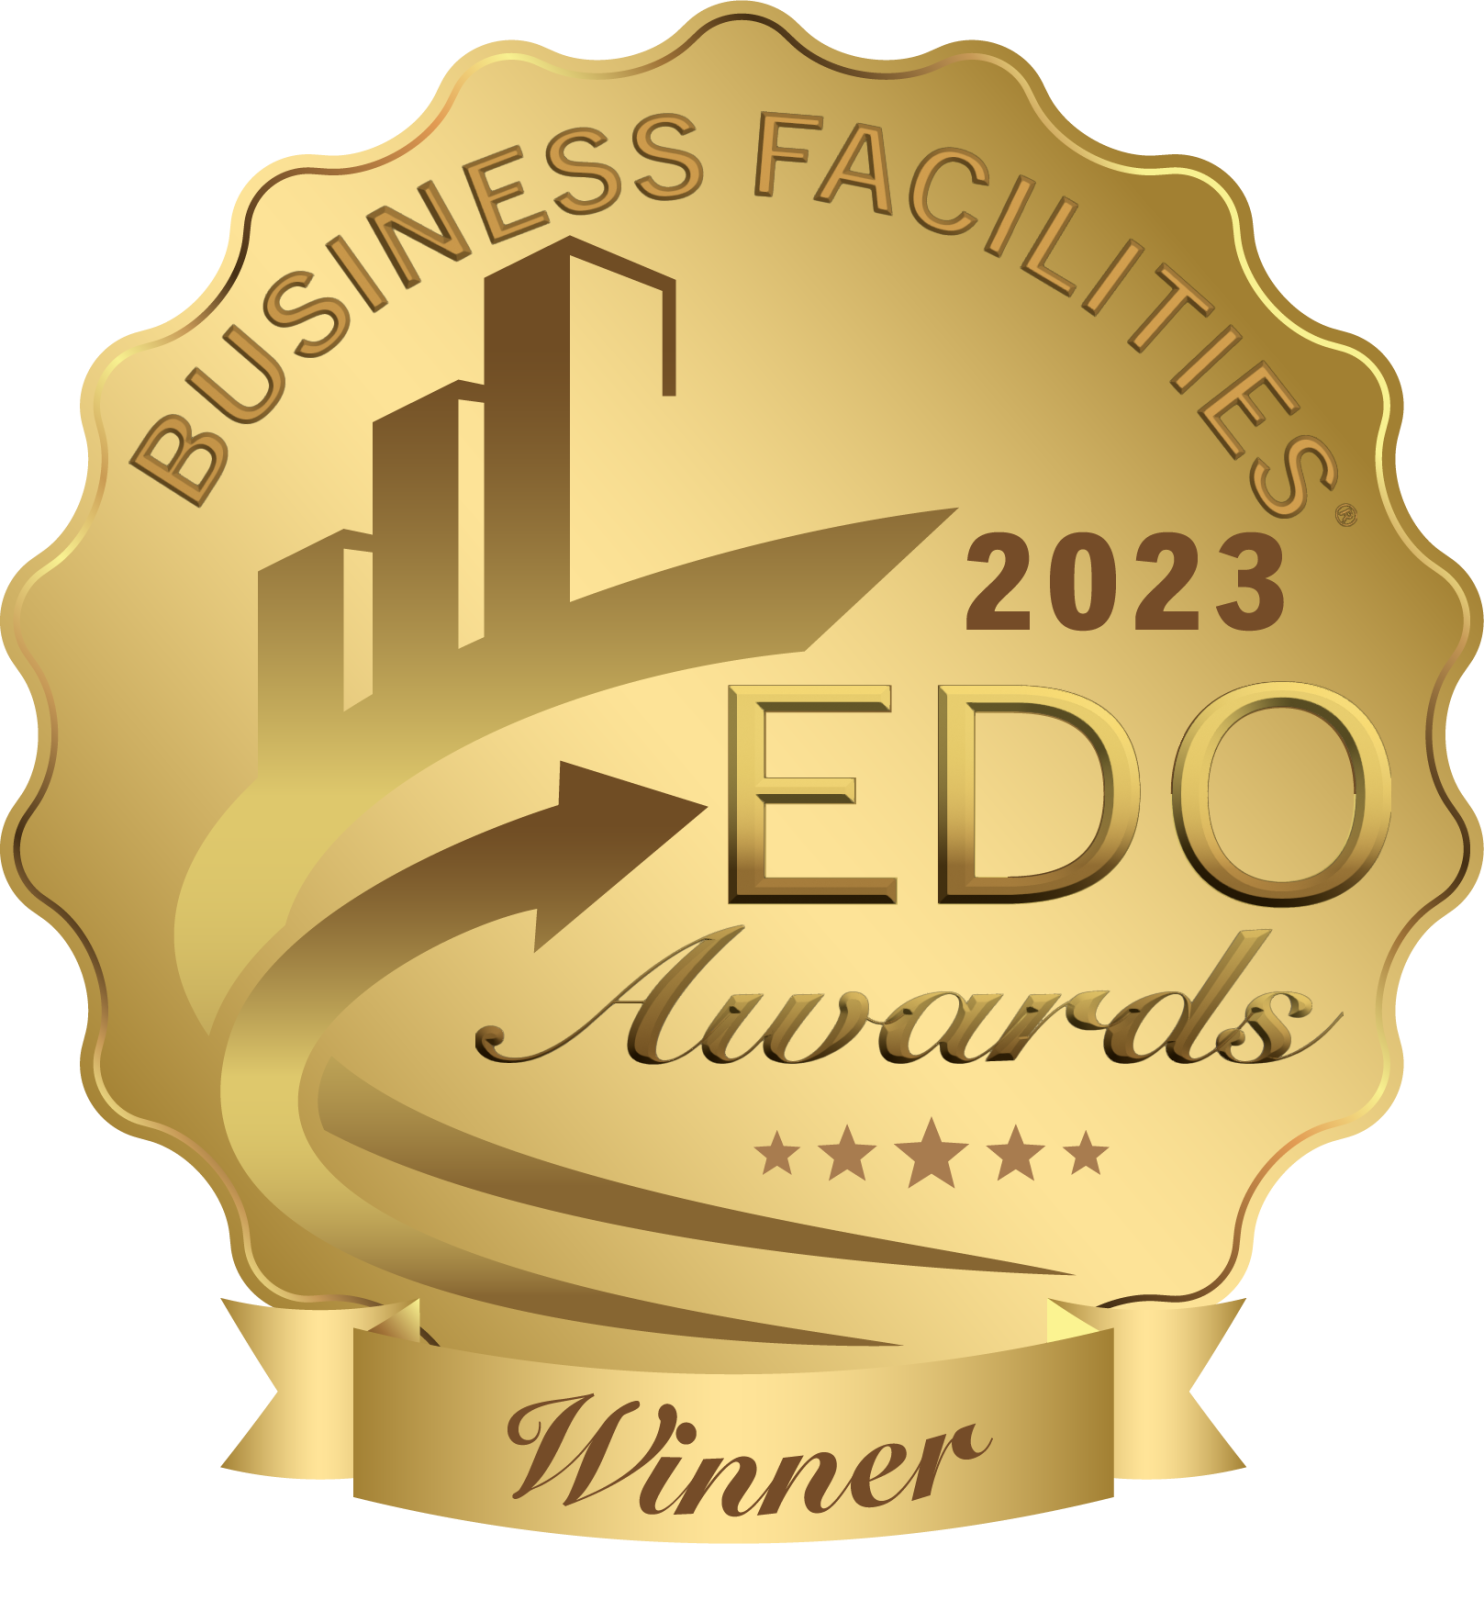 Pflugerville Community Development Corporation wins EDO Award 2023 from Business Facilities Main Photo